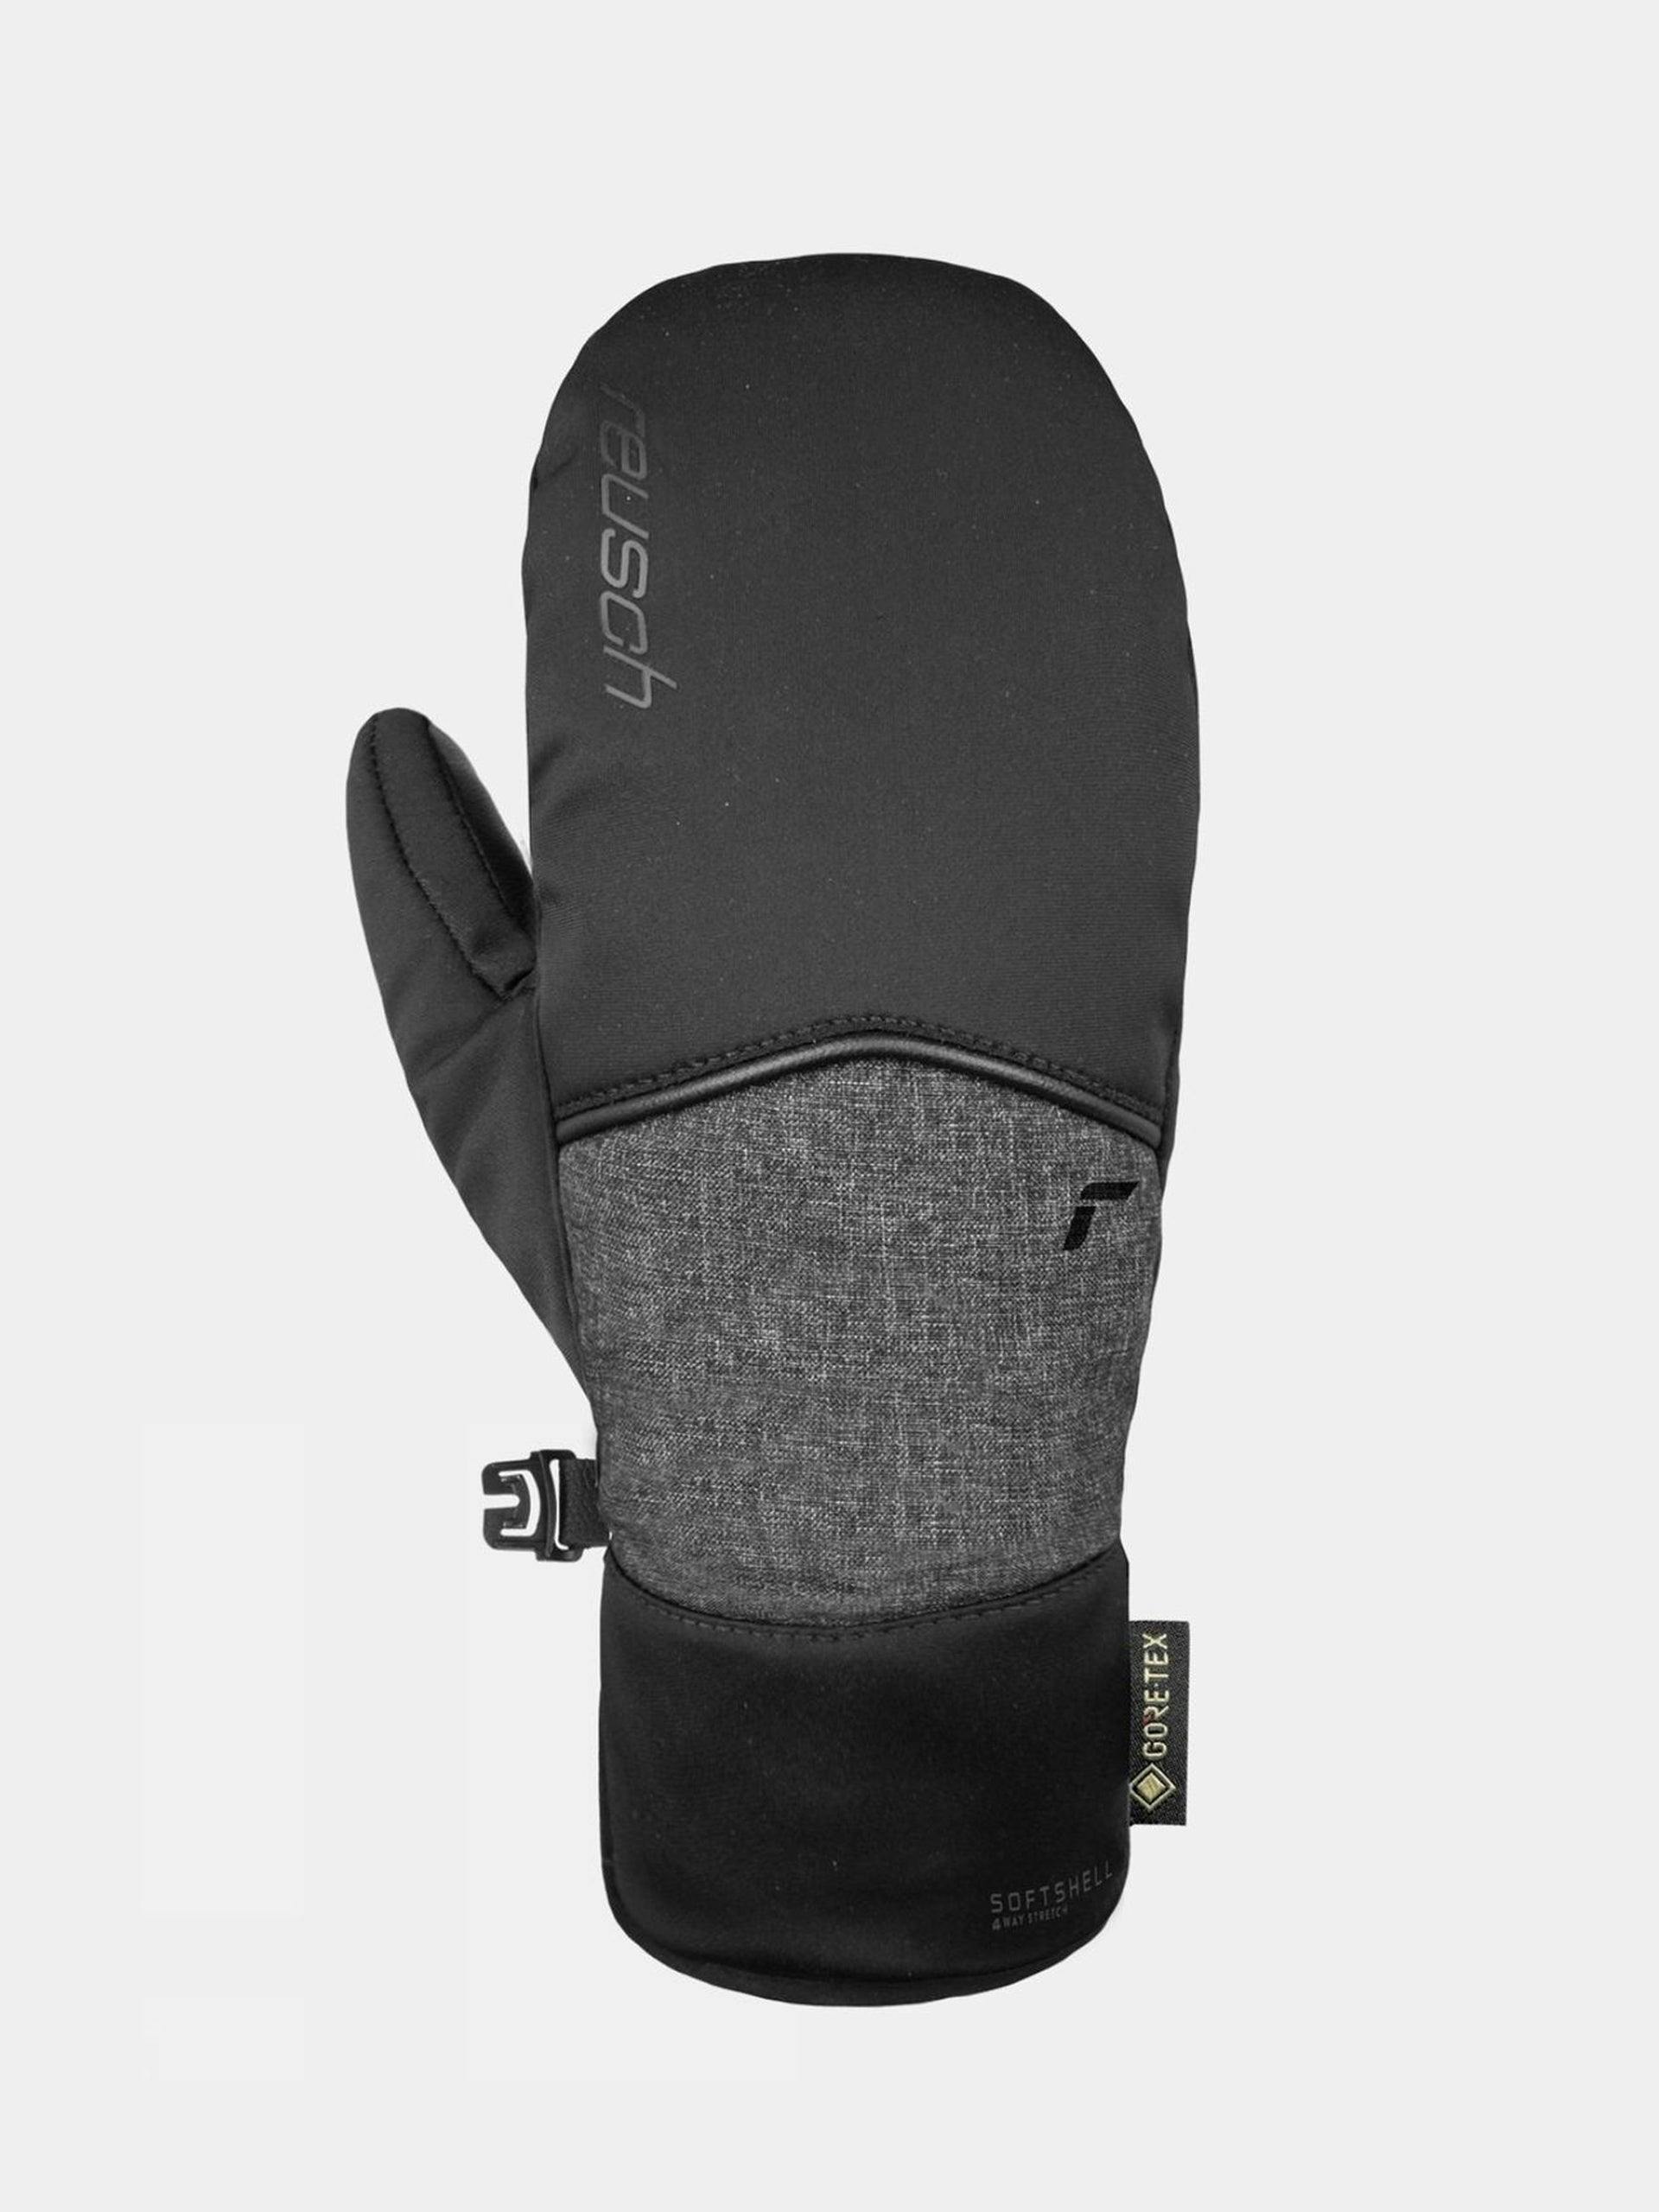 Black and grey ski mittens